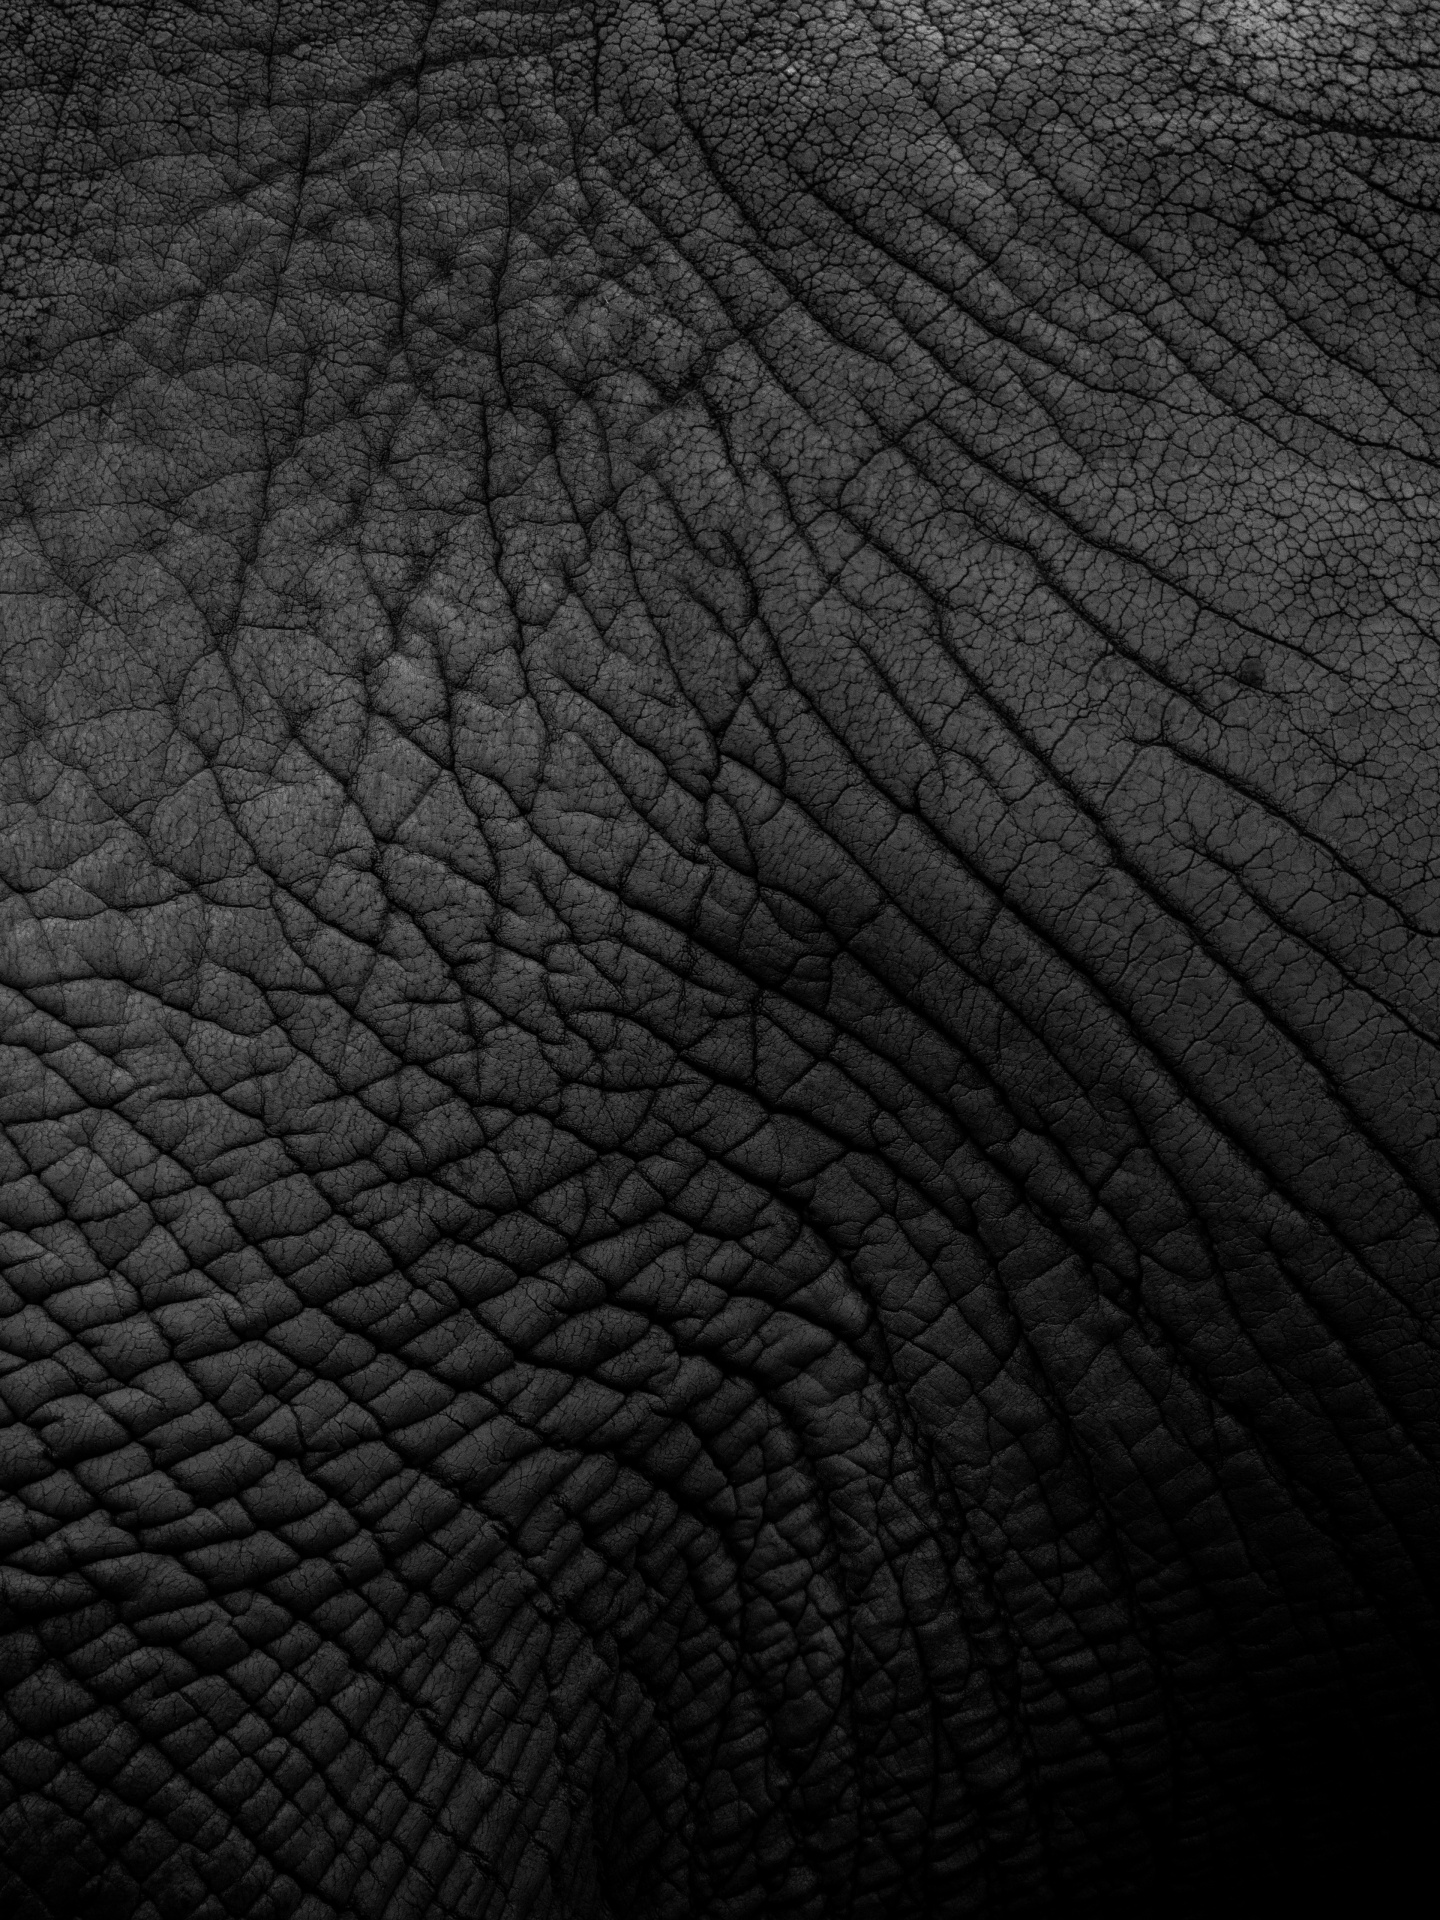 Elephant Skin Texture